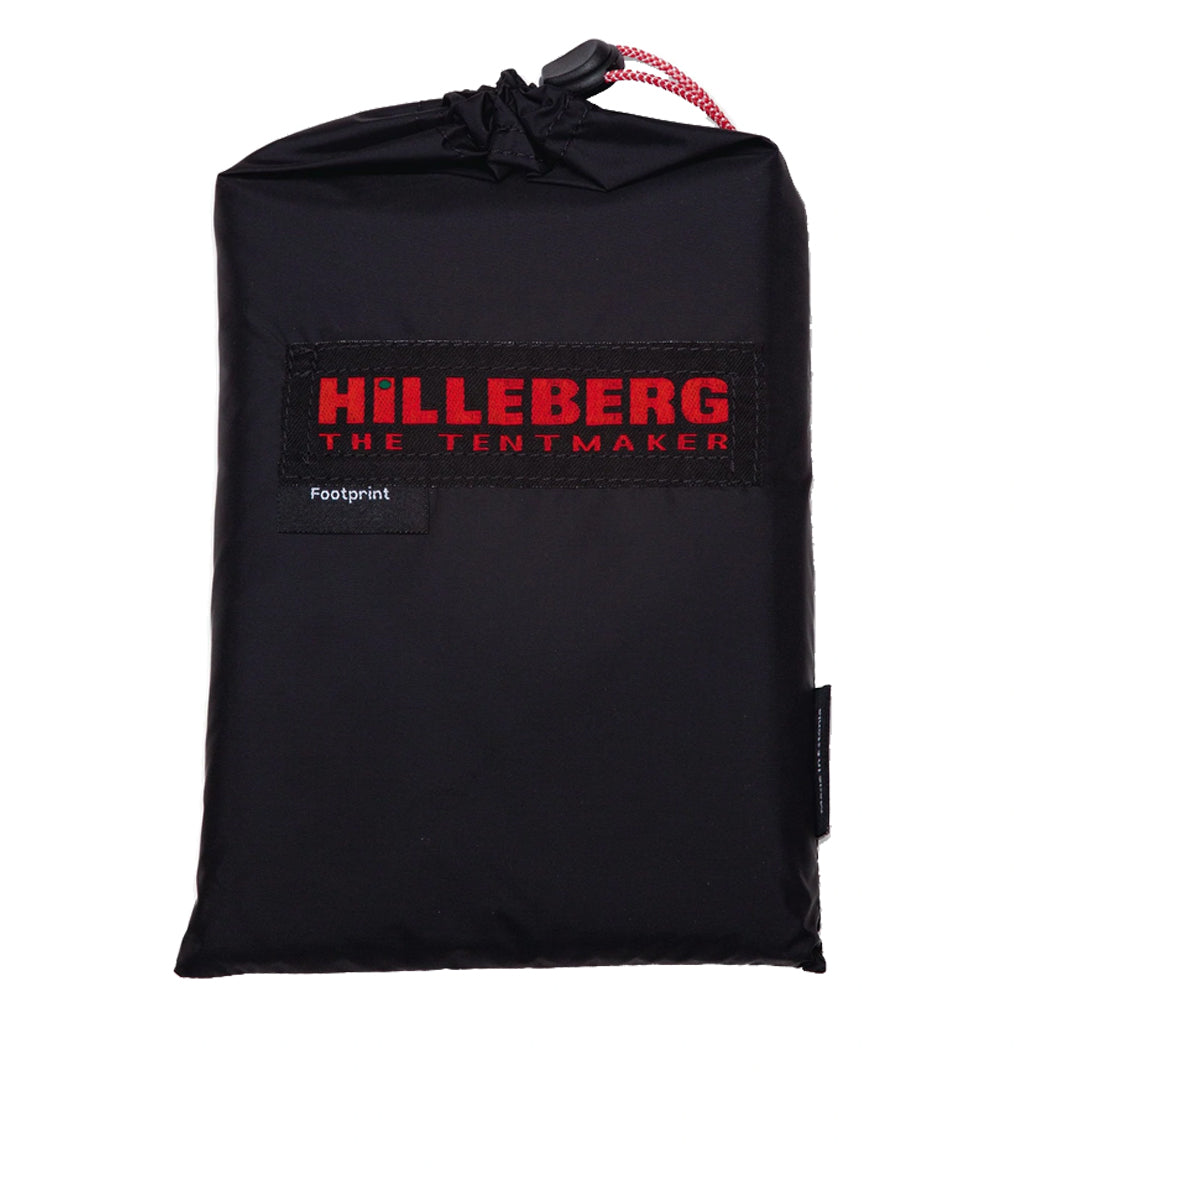 Hilleberg Anjan 2 Footprint in  by GOHUNT | Hilleberg - GOHUNT Shop